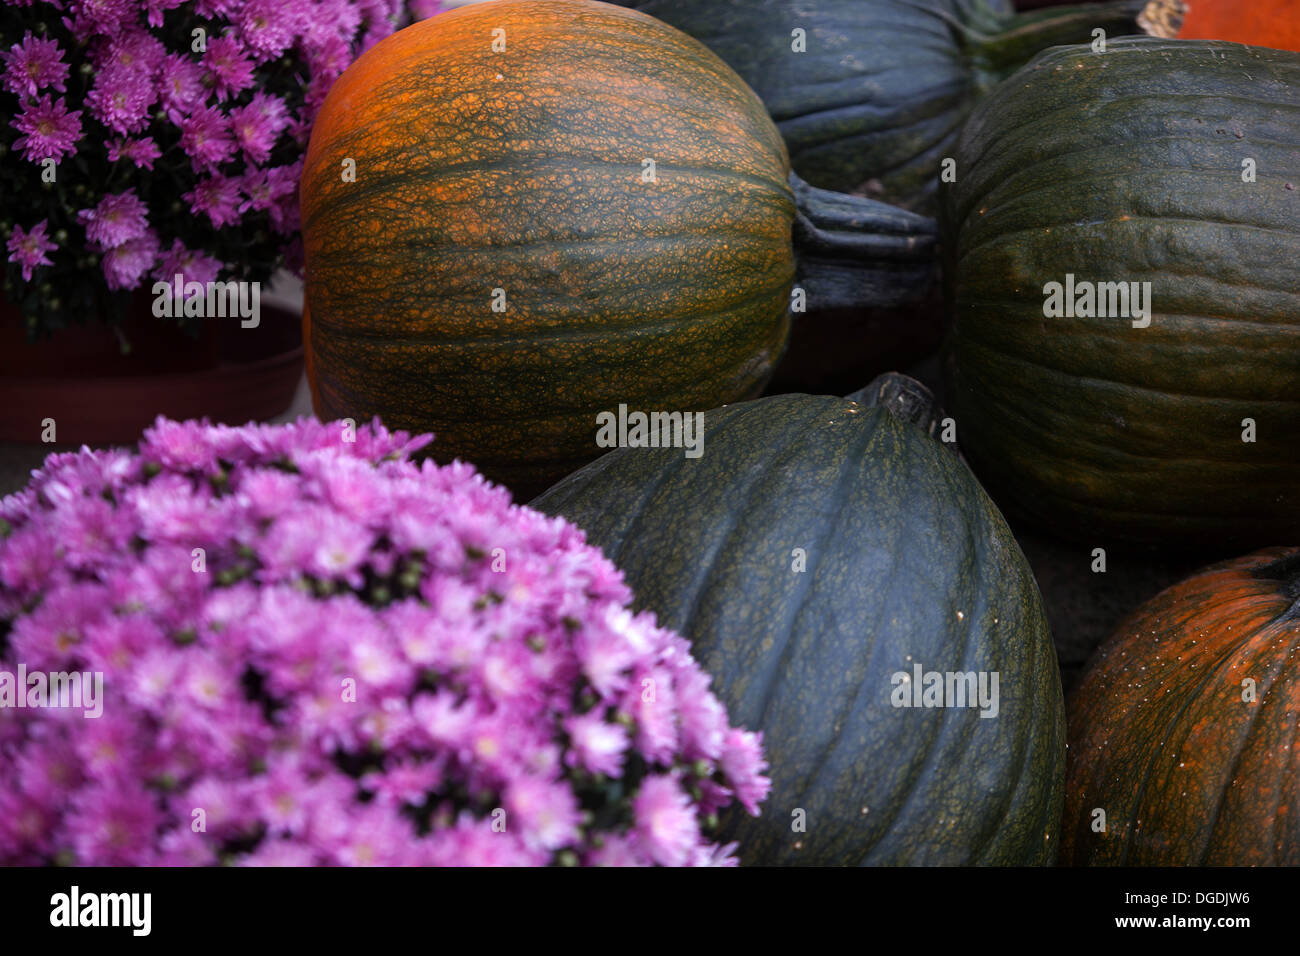 Autumn display with pumpkins Stock Photo